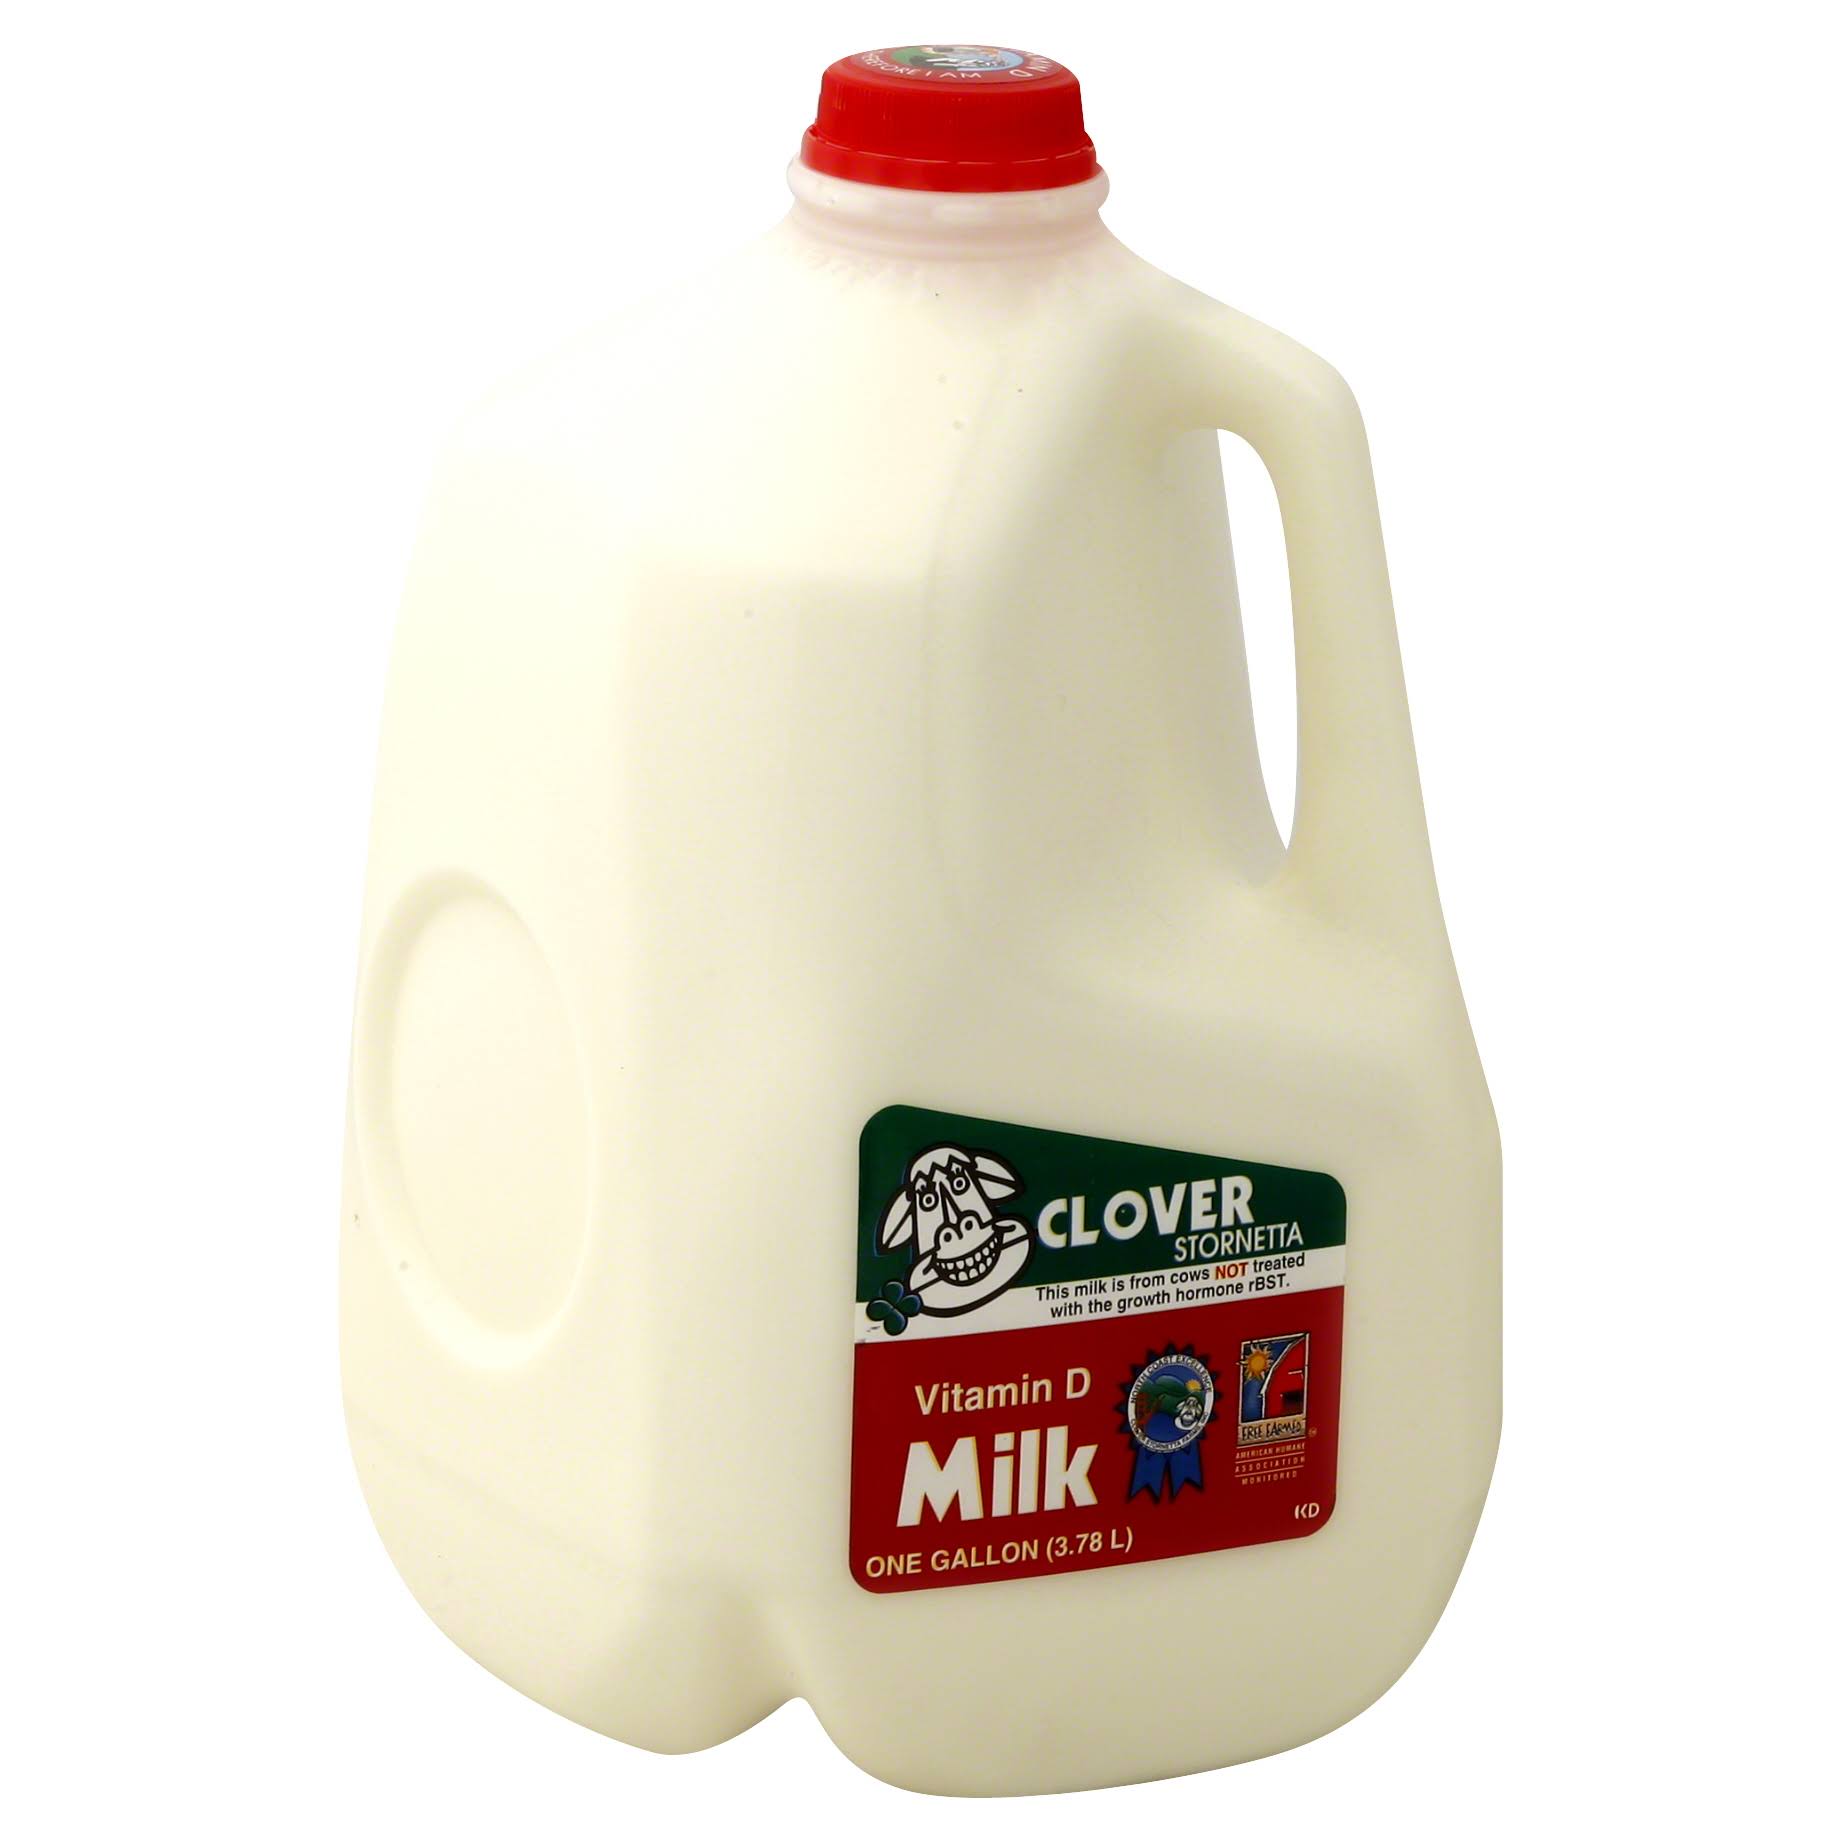 Clover Milk, Vitamin D - 1 gl (3.78 lt)